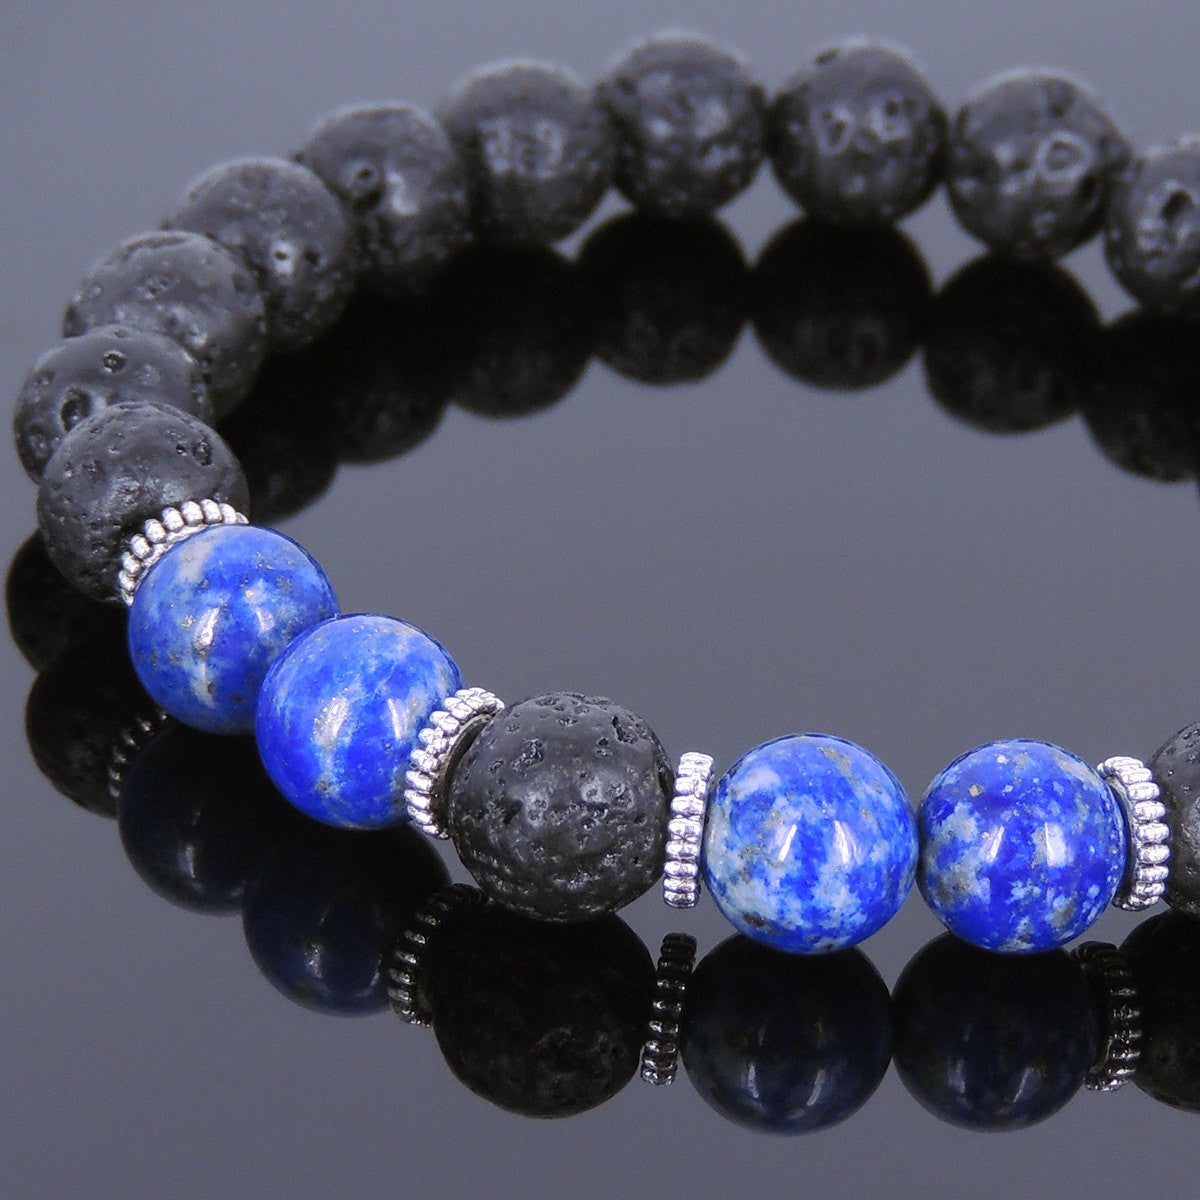 Lapis Lazuli & Lava Rock Healing Gemstone Bracelet with Tibetan Silver Spacers - Handmade by Gem & Silver TSB093